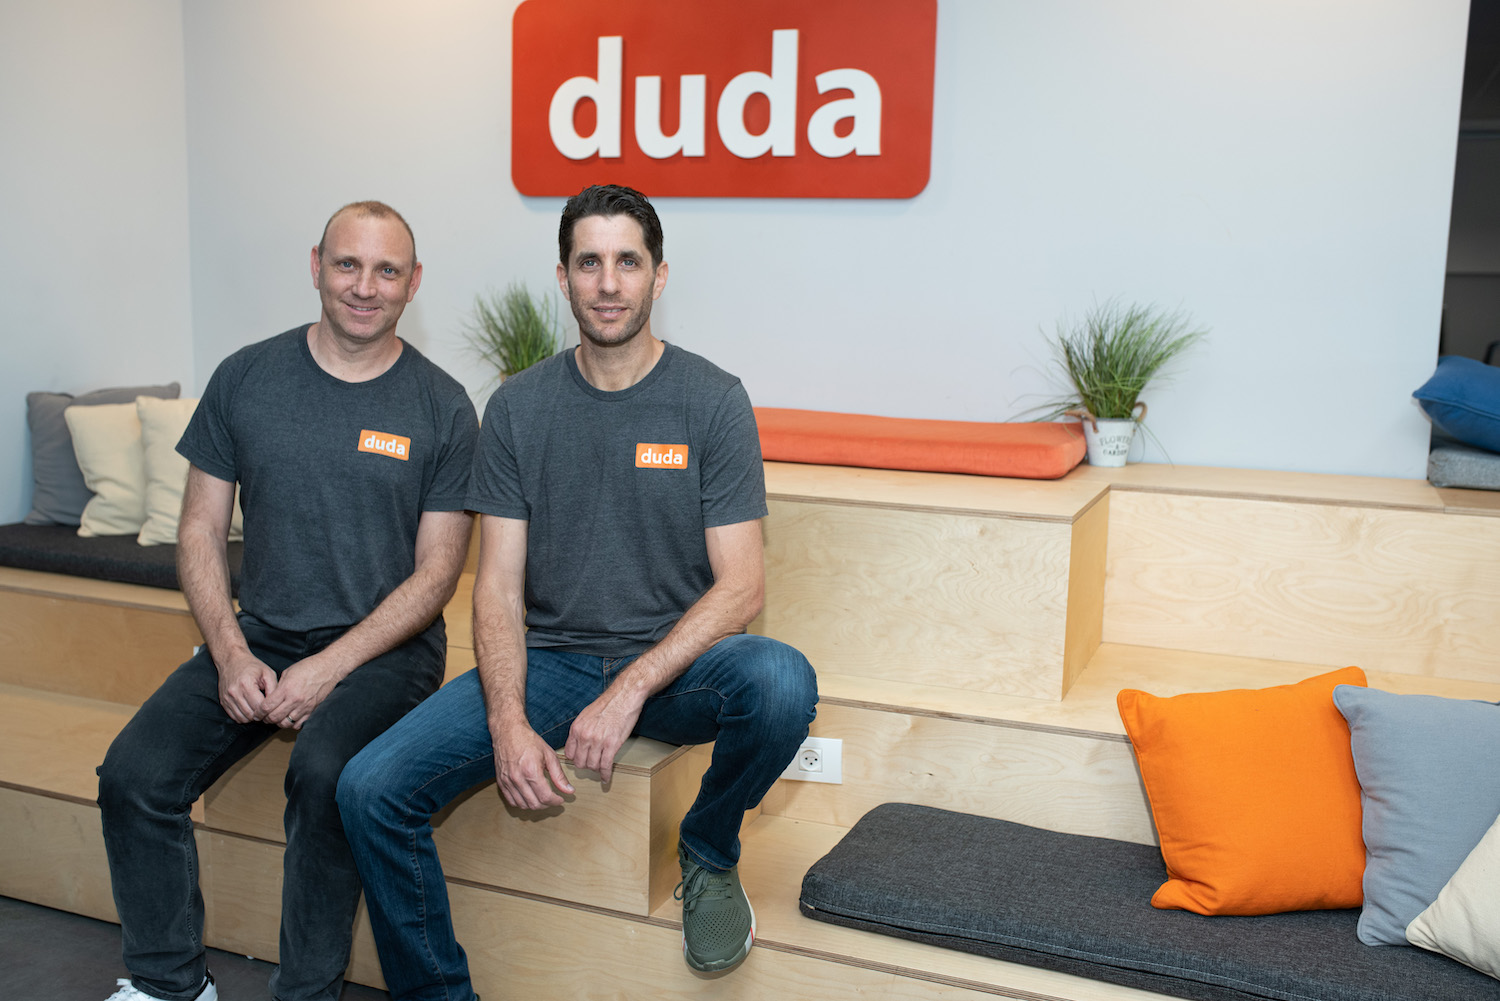 duda co-founders